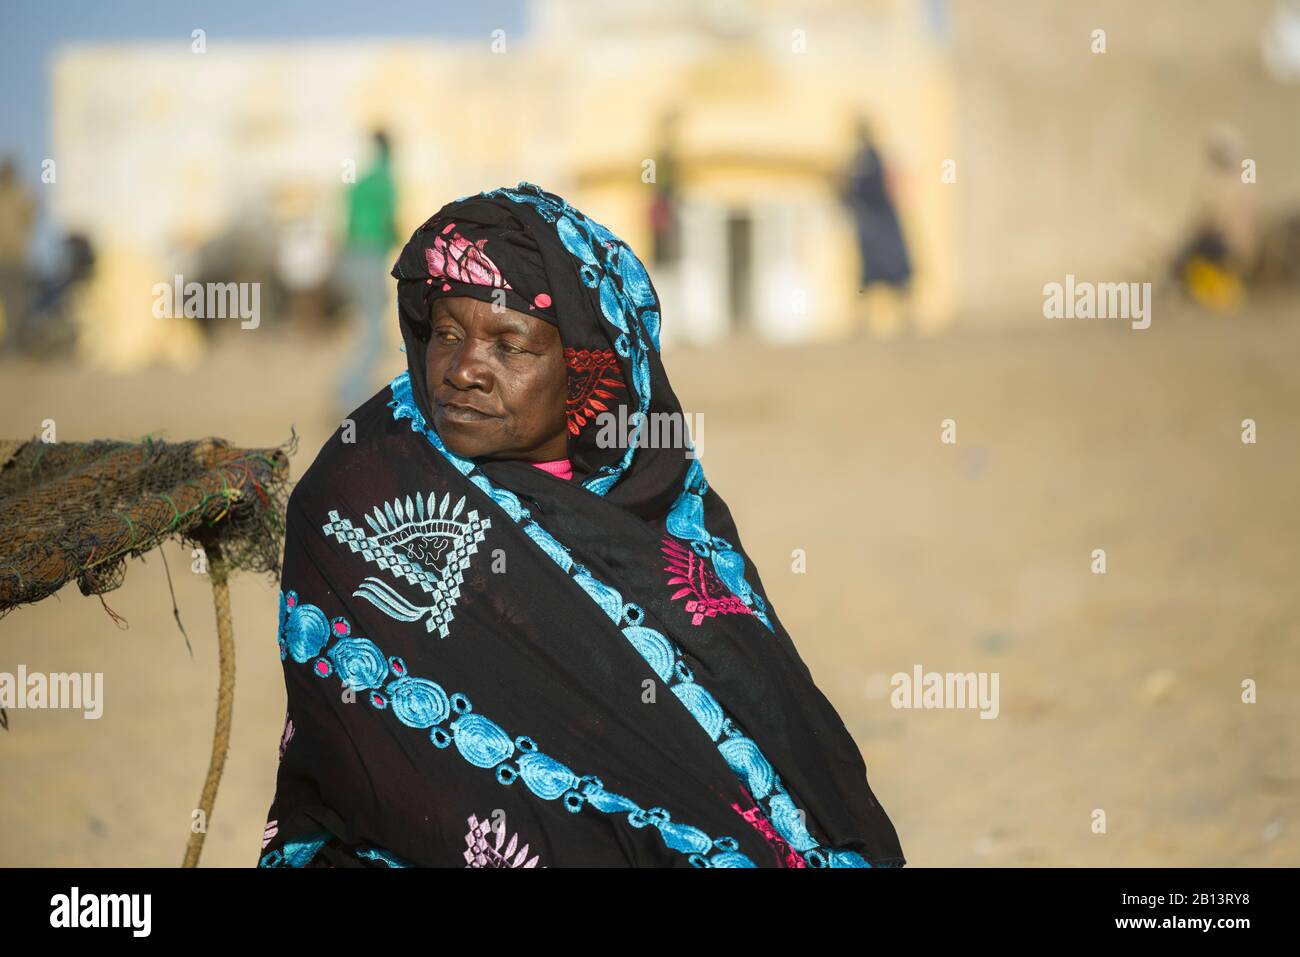 FIshermen,peddlers,boats at Nouakchott's famous fish market Stock Photo